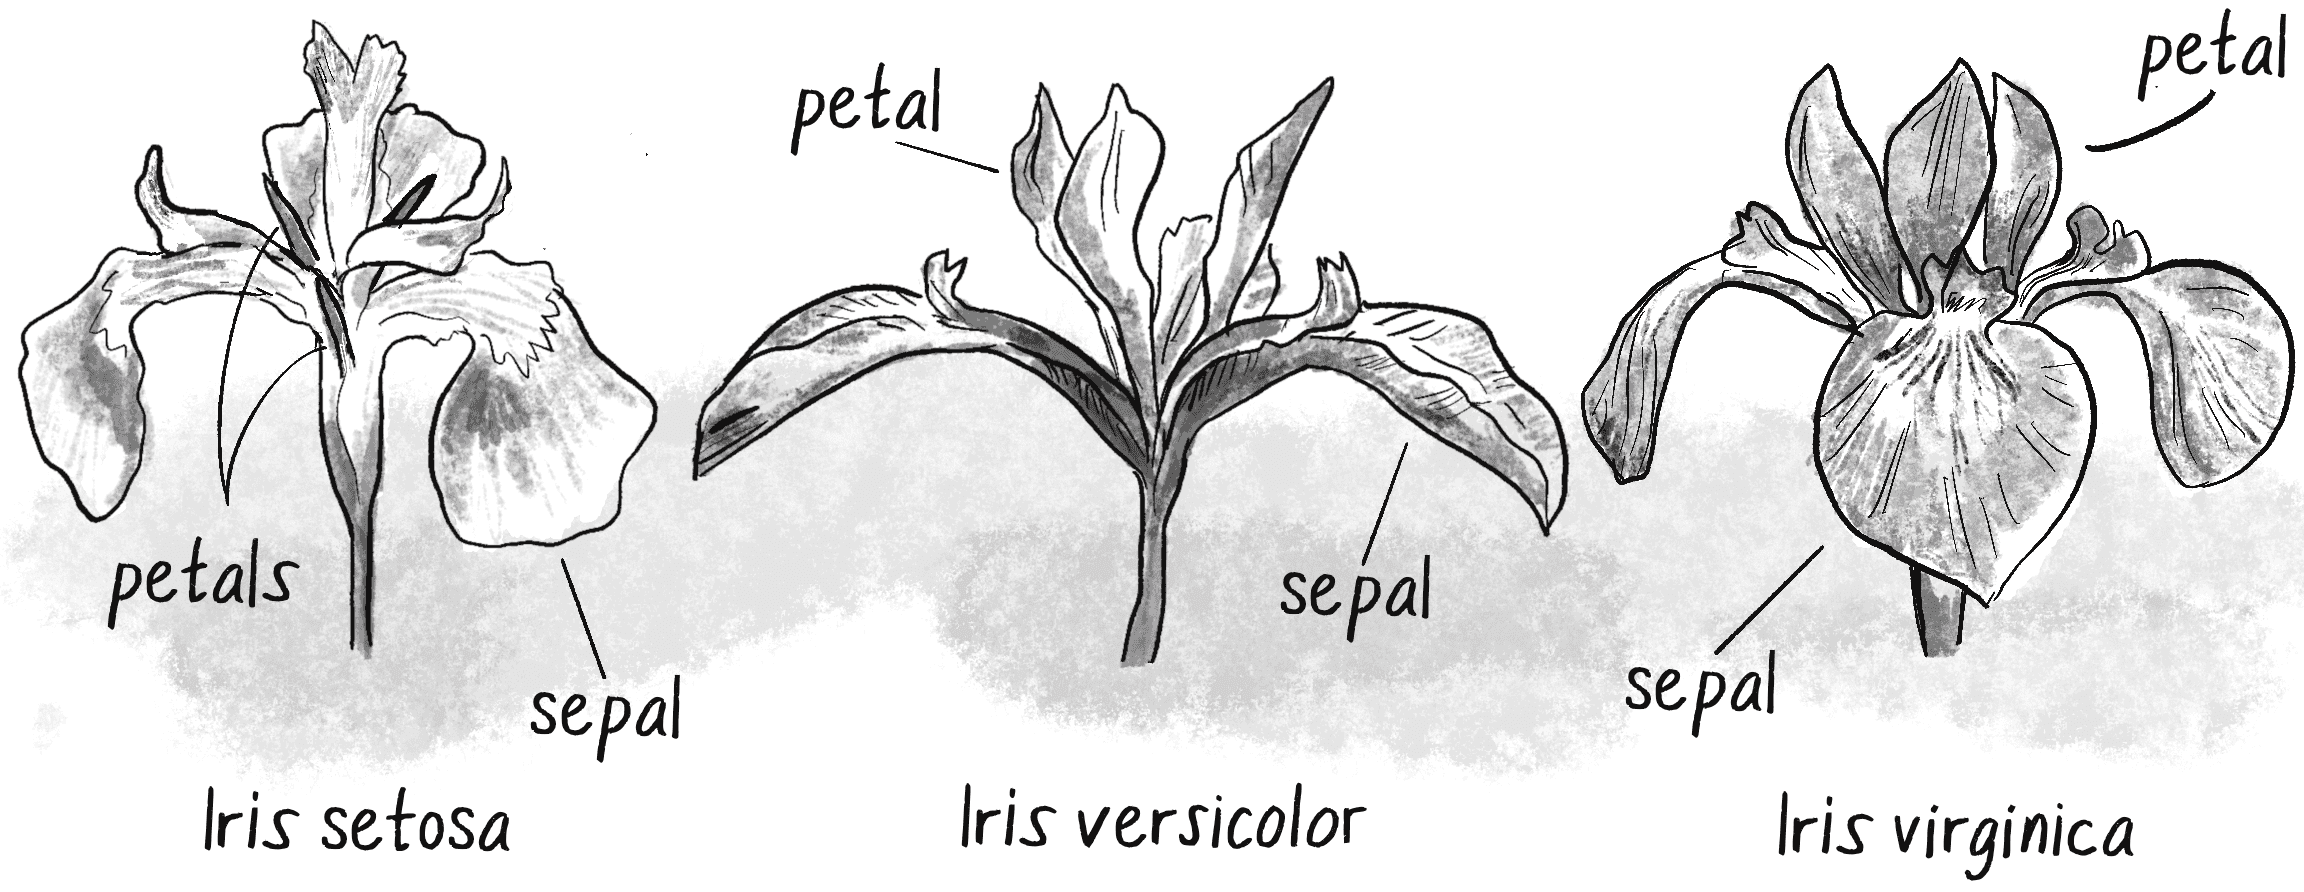 Figure 10.17: Three distinct species of iris flowers